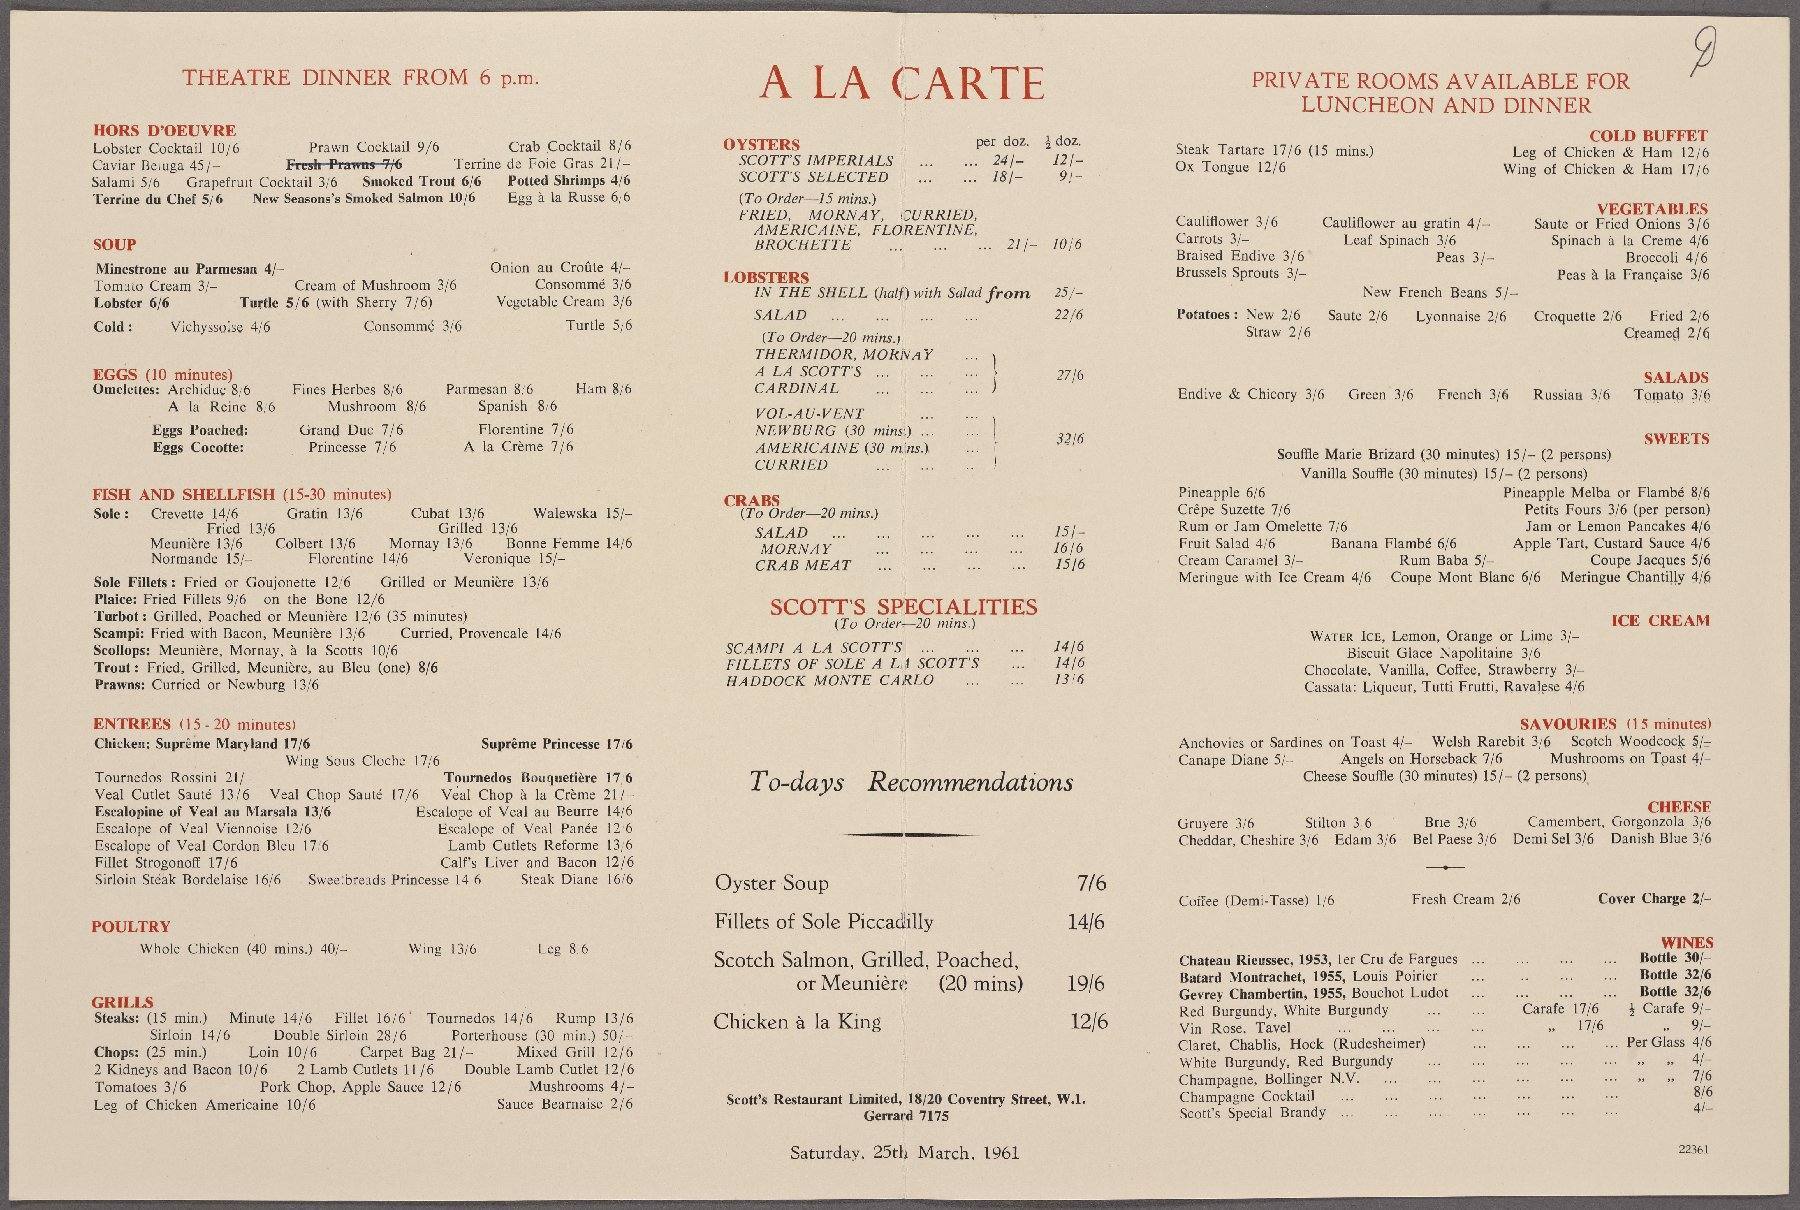 Scott's Restaurant on Coventry Street near Leicester Square, 1961.